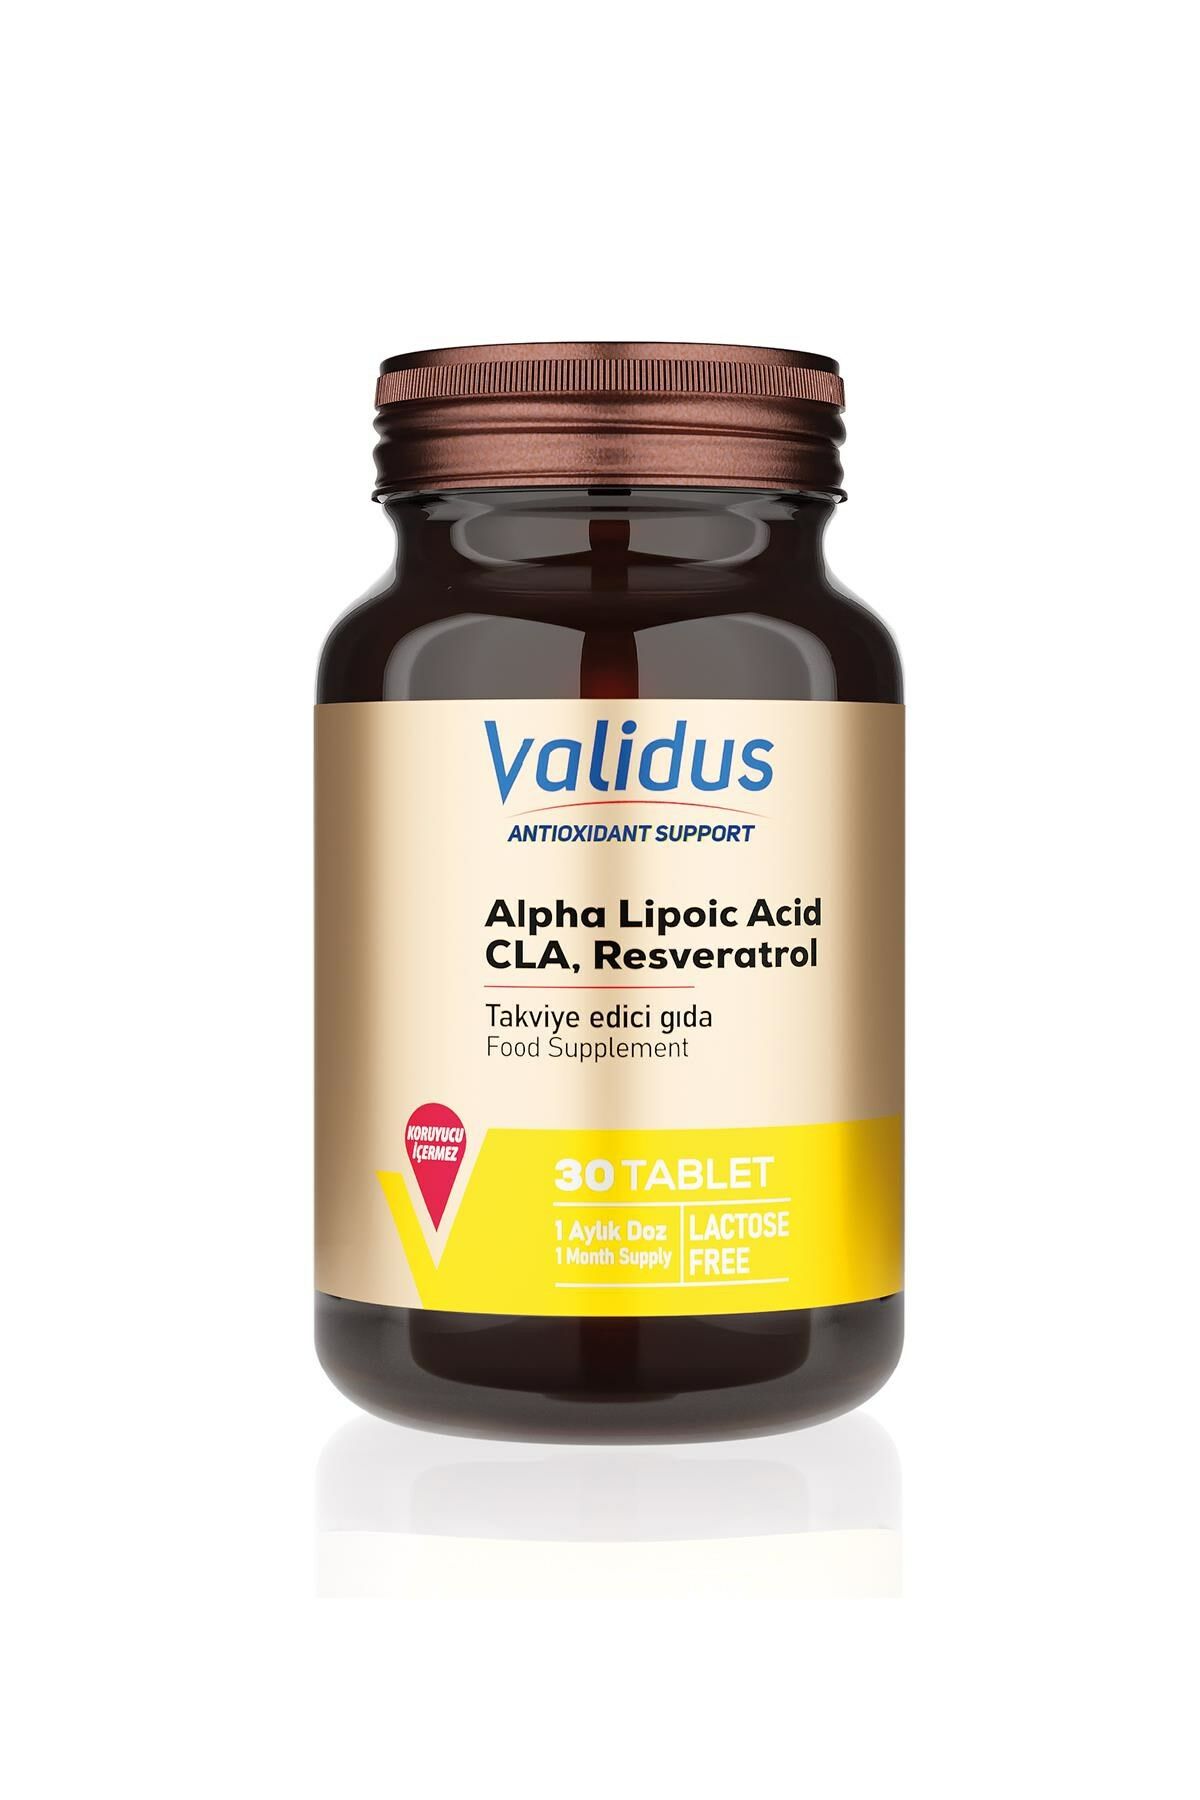 Validus Antioxidant Support Alpha Lipoic Acid + CLA + Resveratrol 30 Tablet